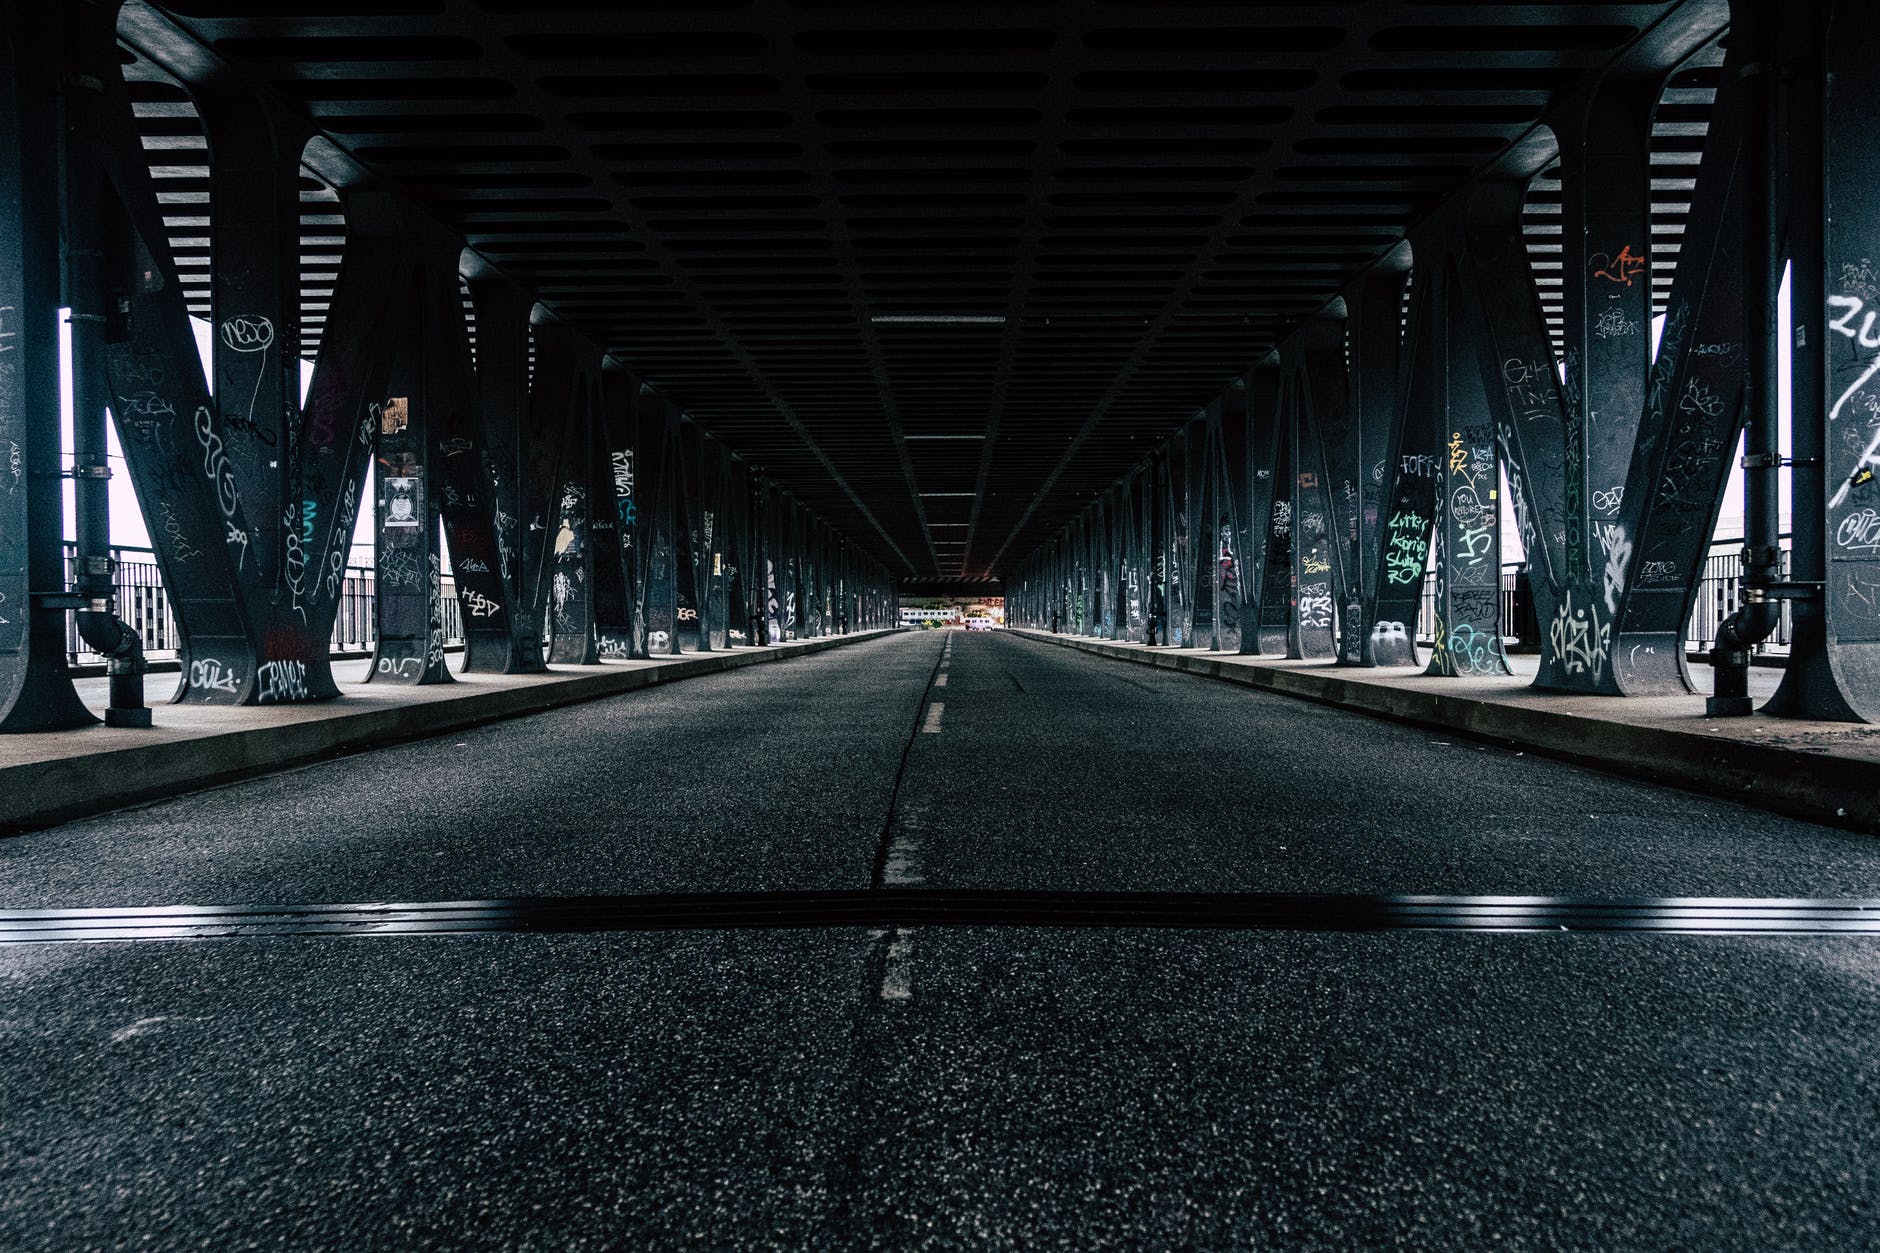 We started living under a bridge. | Source: Pexels